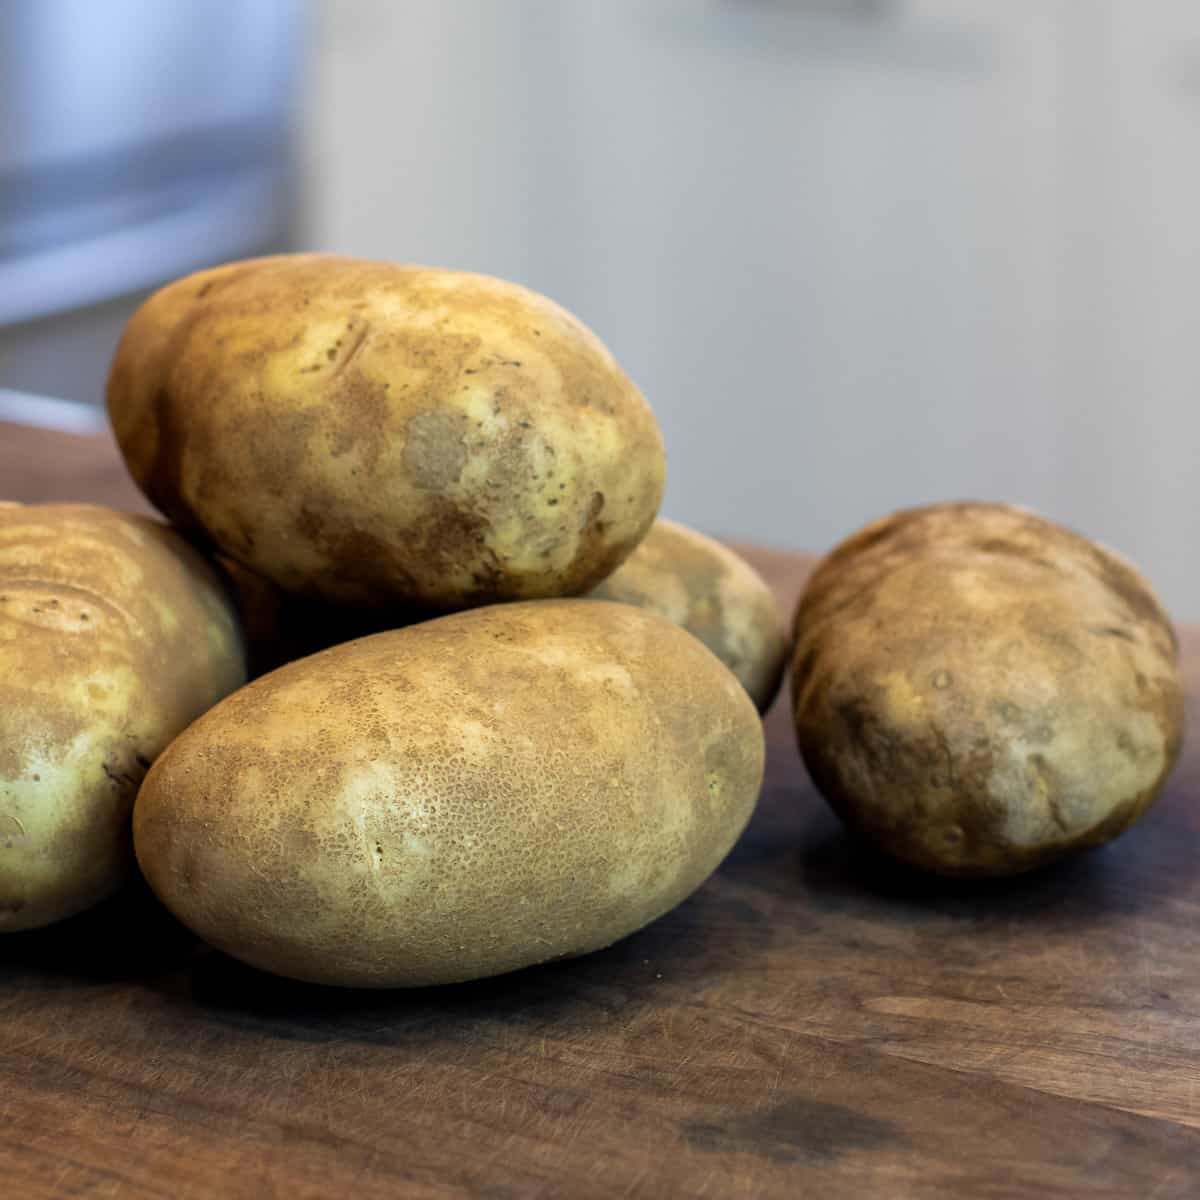 Raw whole potatoes on a cutting board.